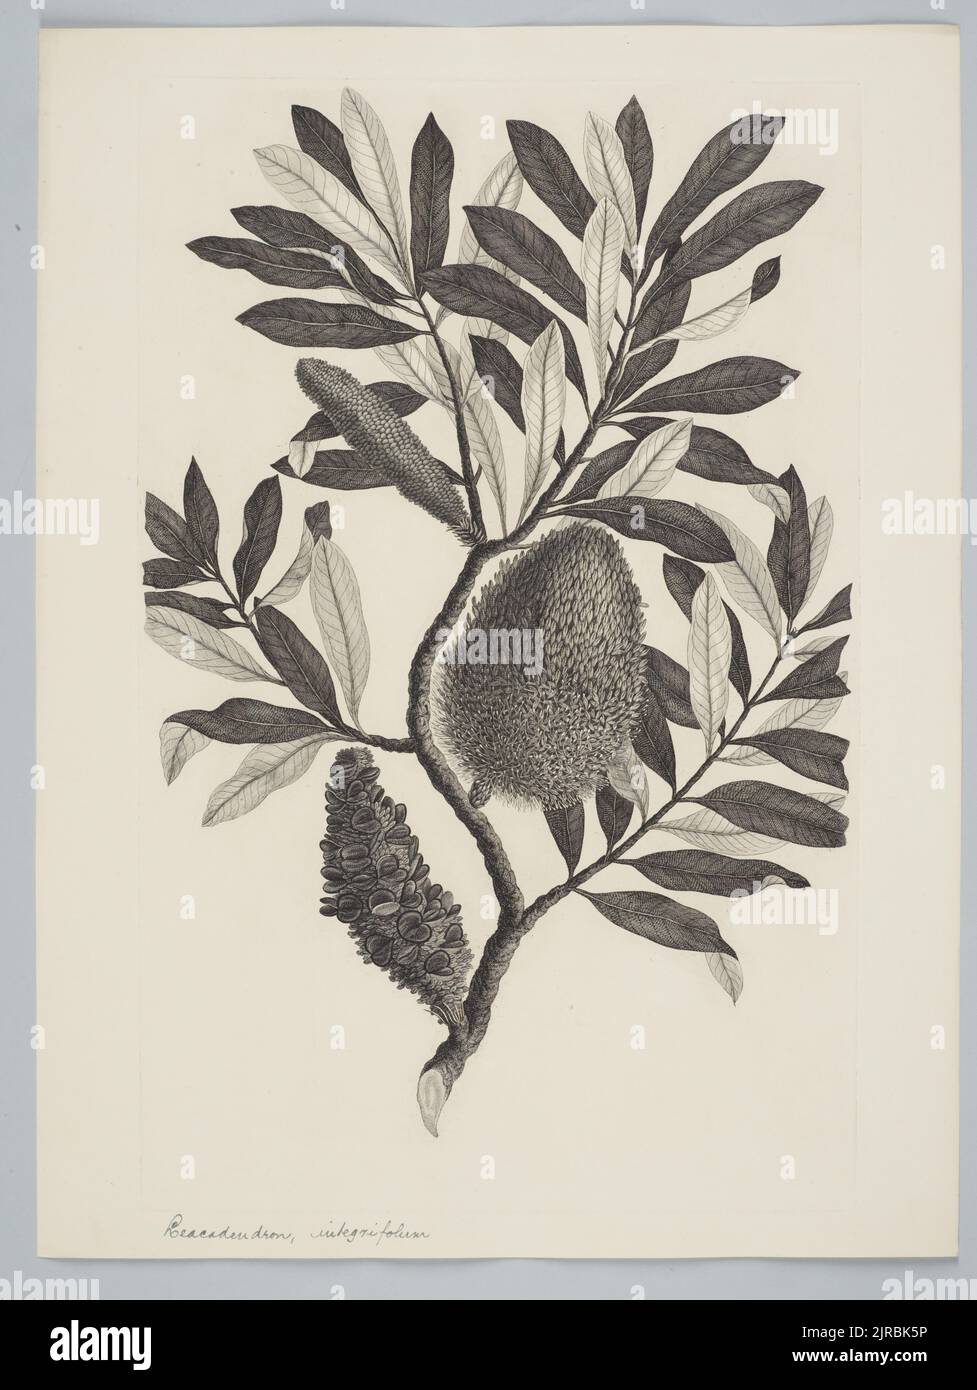 Banksia integrifolia Linnaeus f., 1895, United Kingdom, by Sydney Parkinson. Gift of the British Museum, 1895. Stock Photo